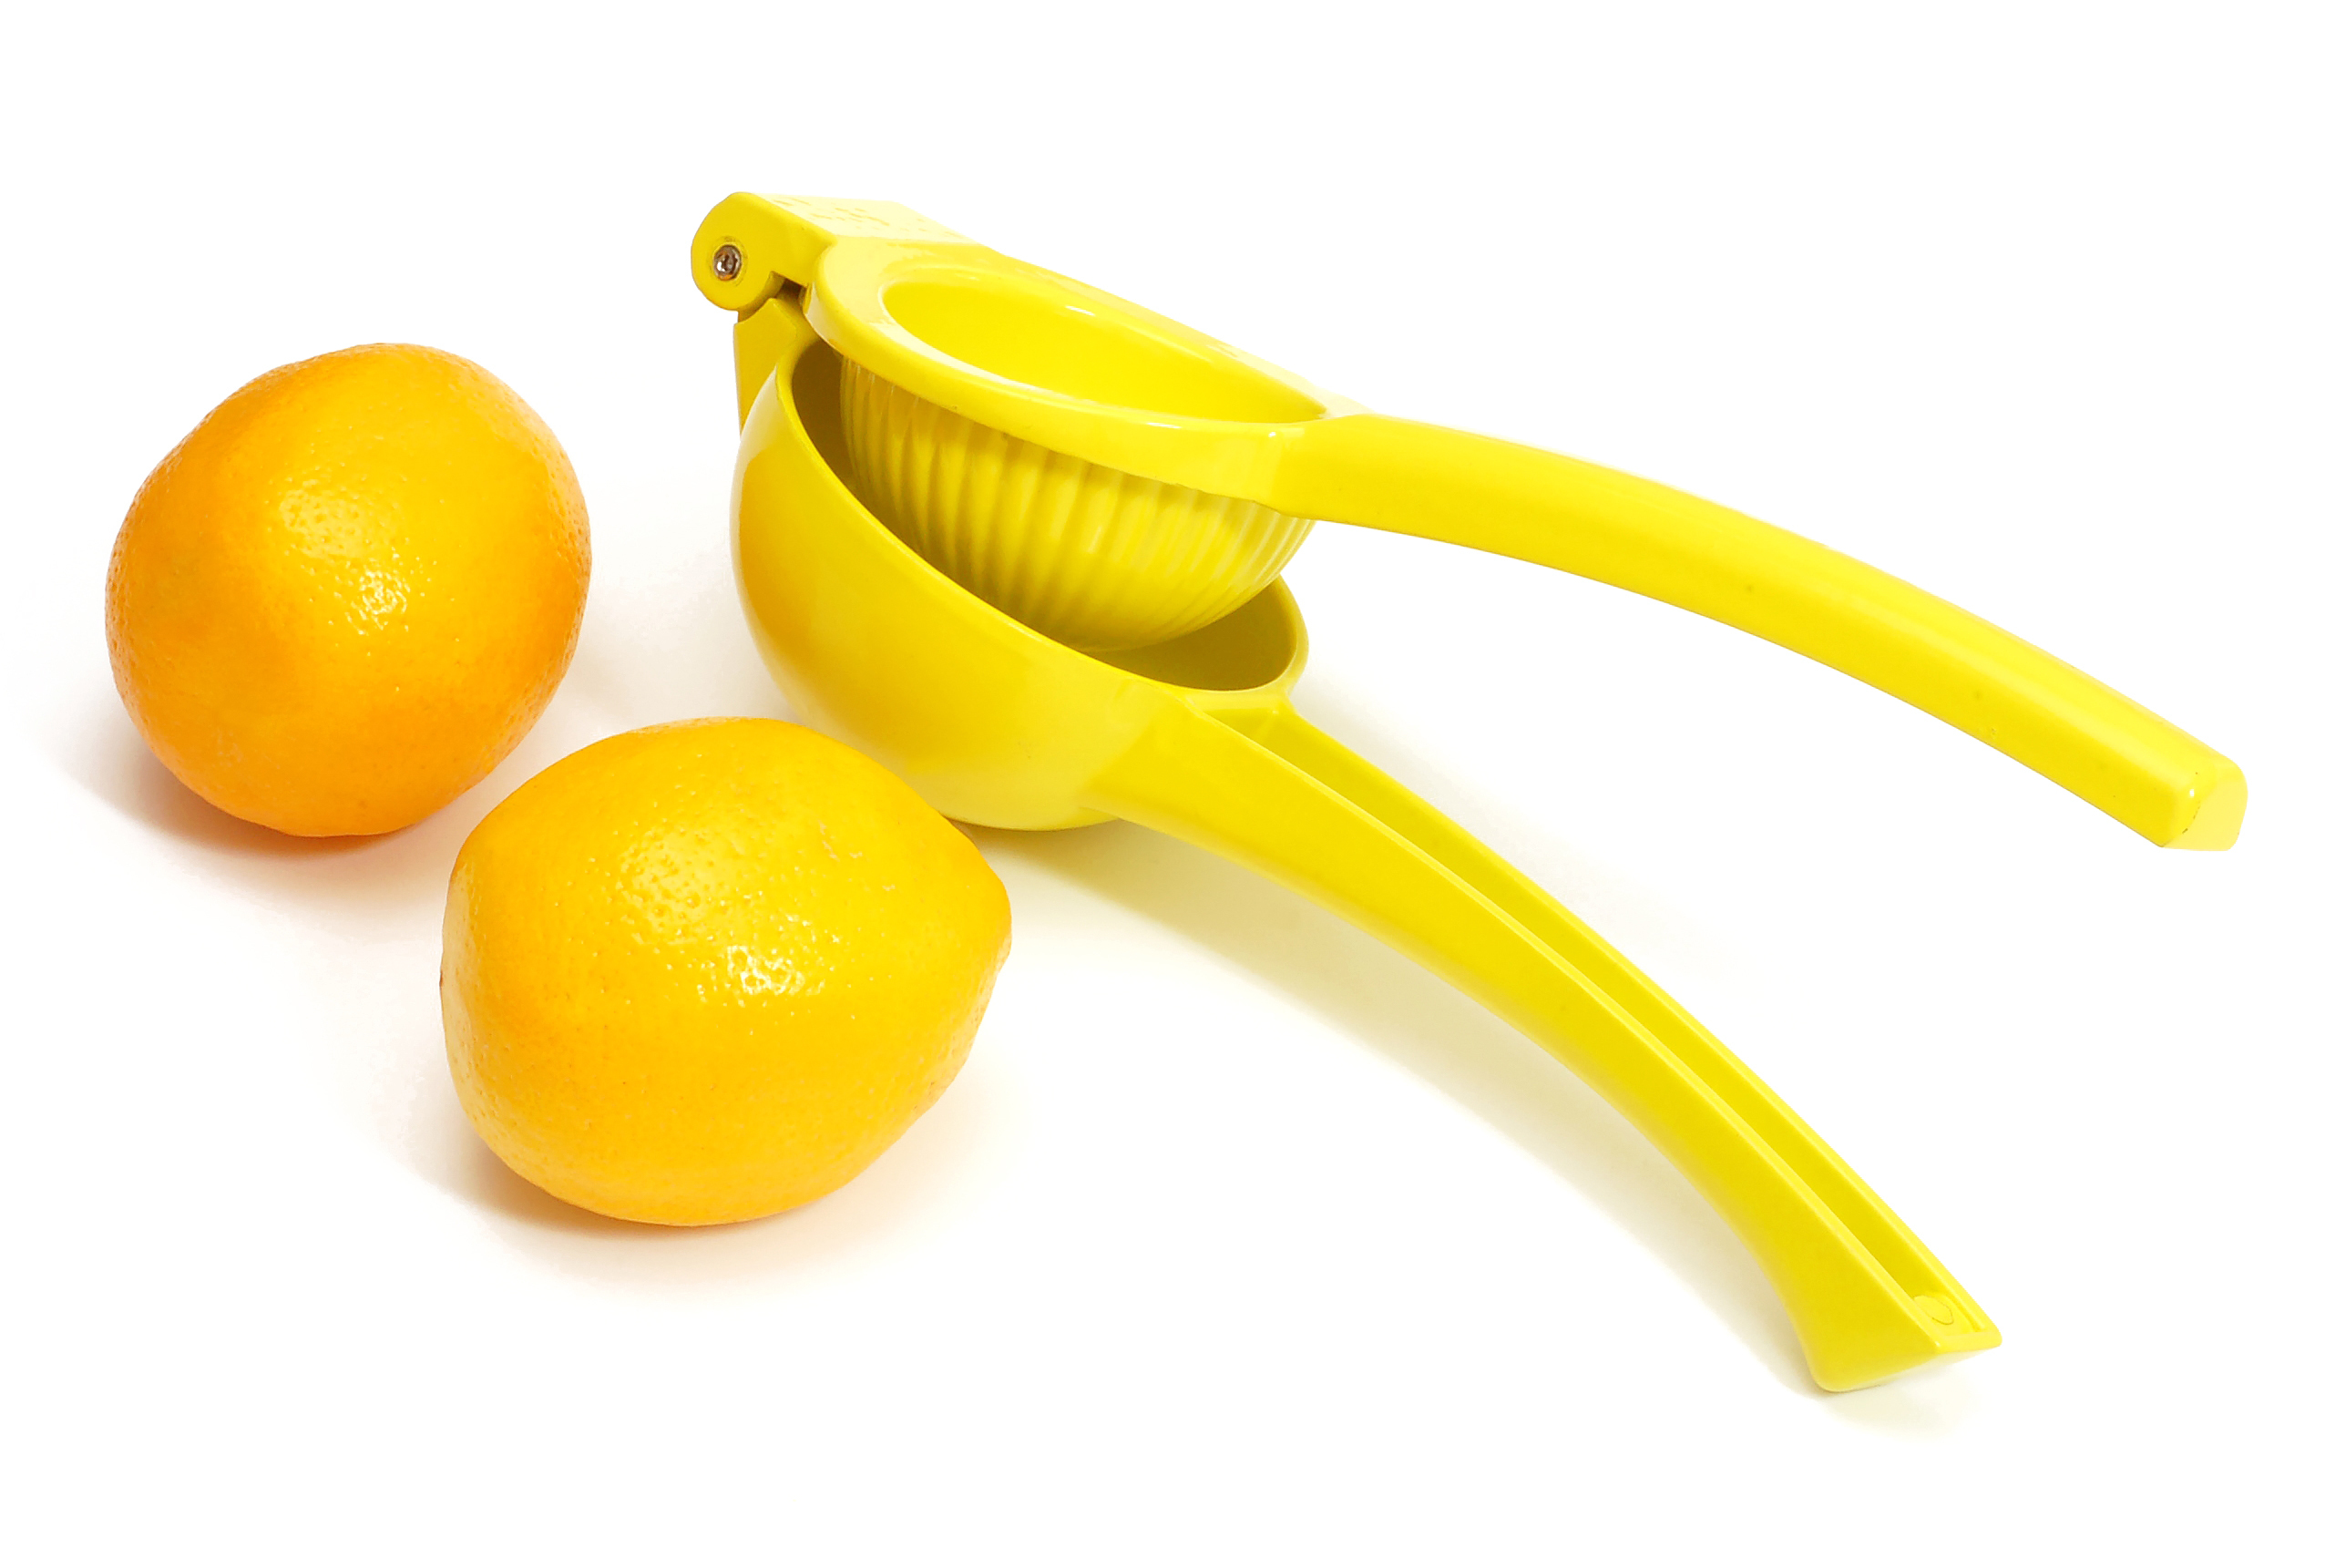 Lemon,Juicer,And,Lemons,On,A,White,Background